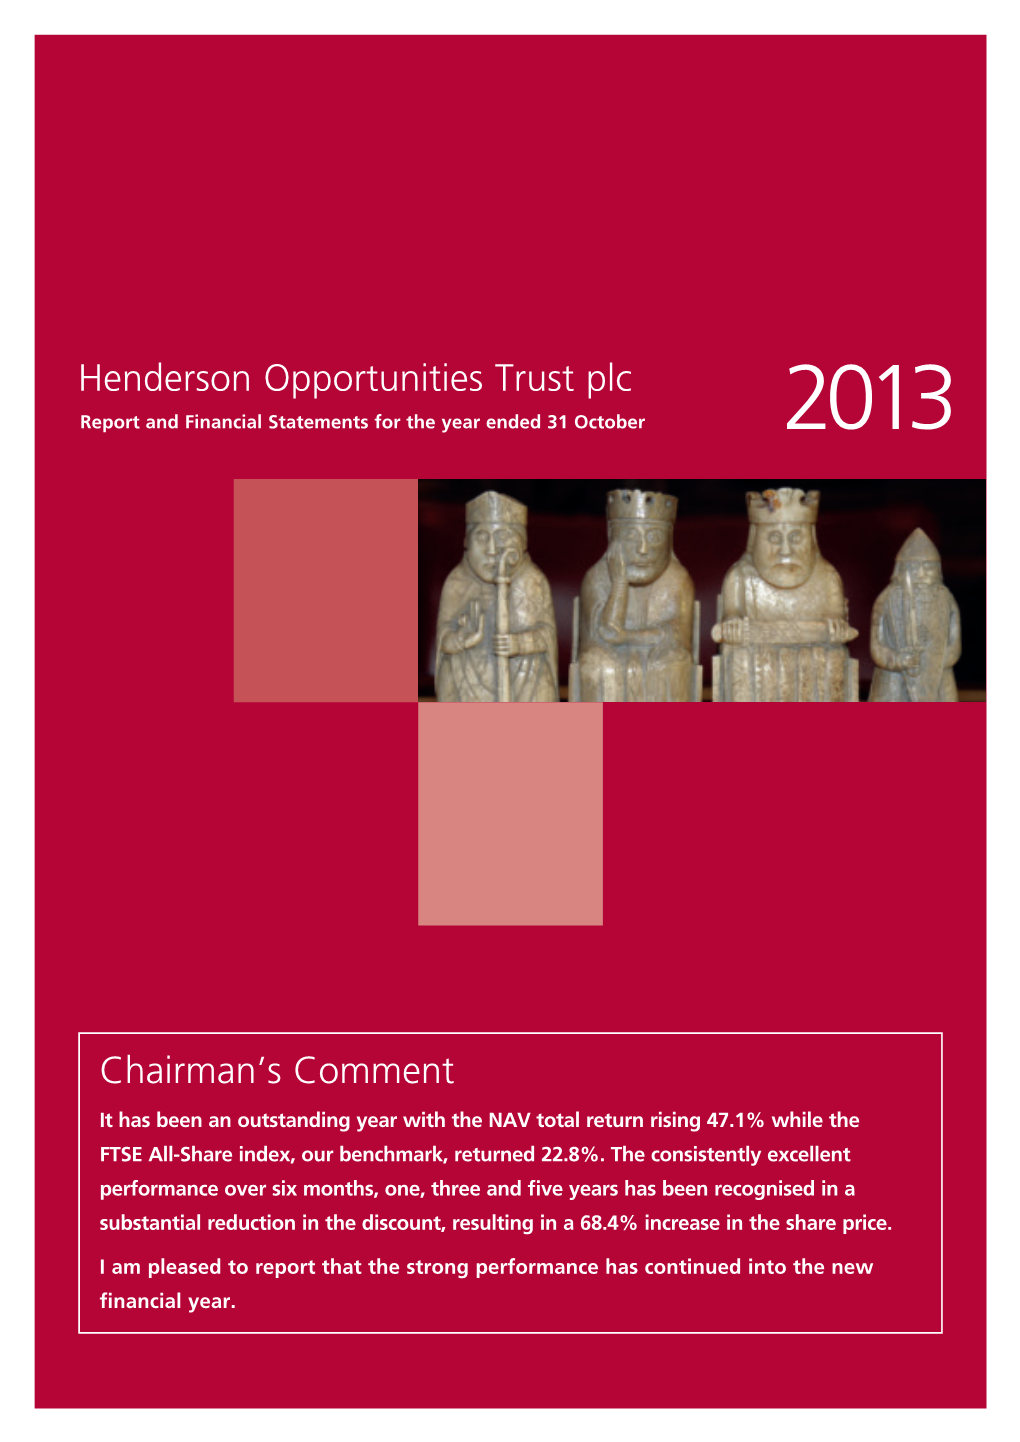 Henderson Opportunities Trust Plc Chairman's